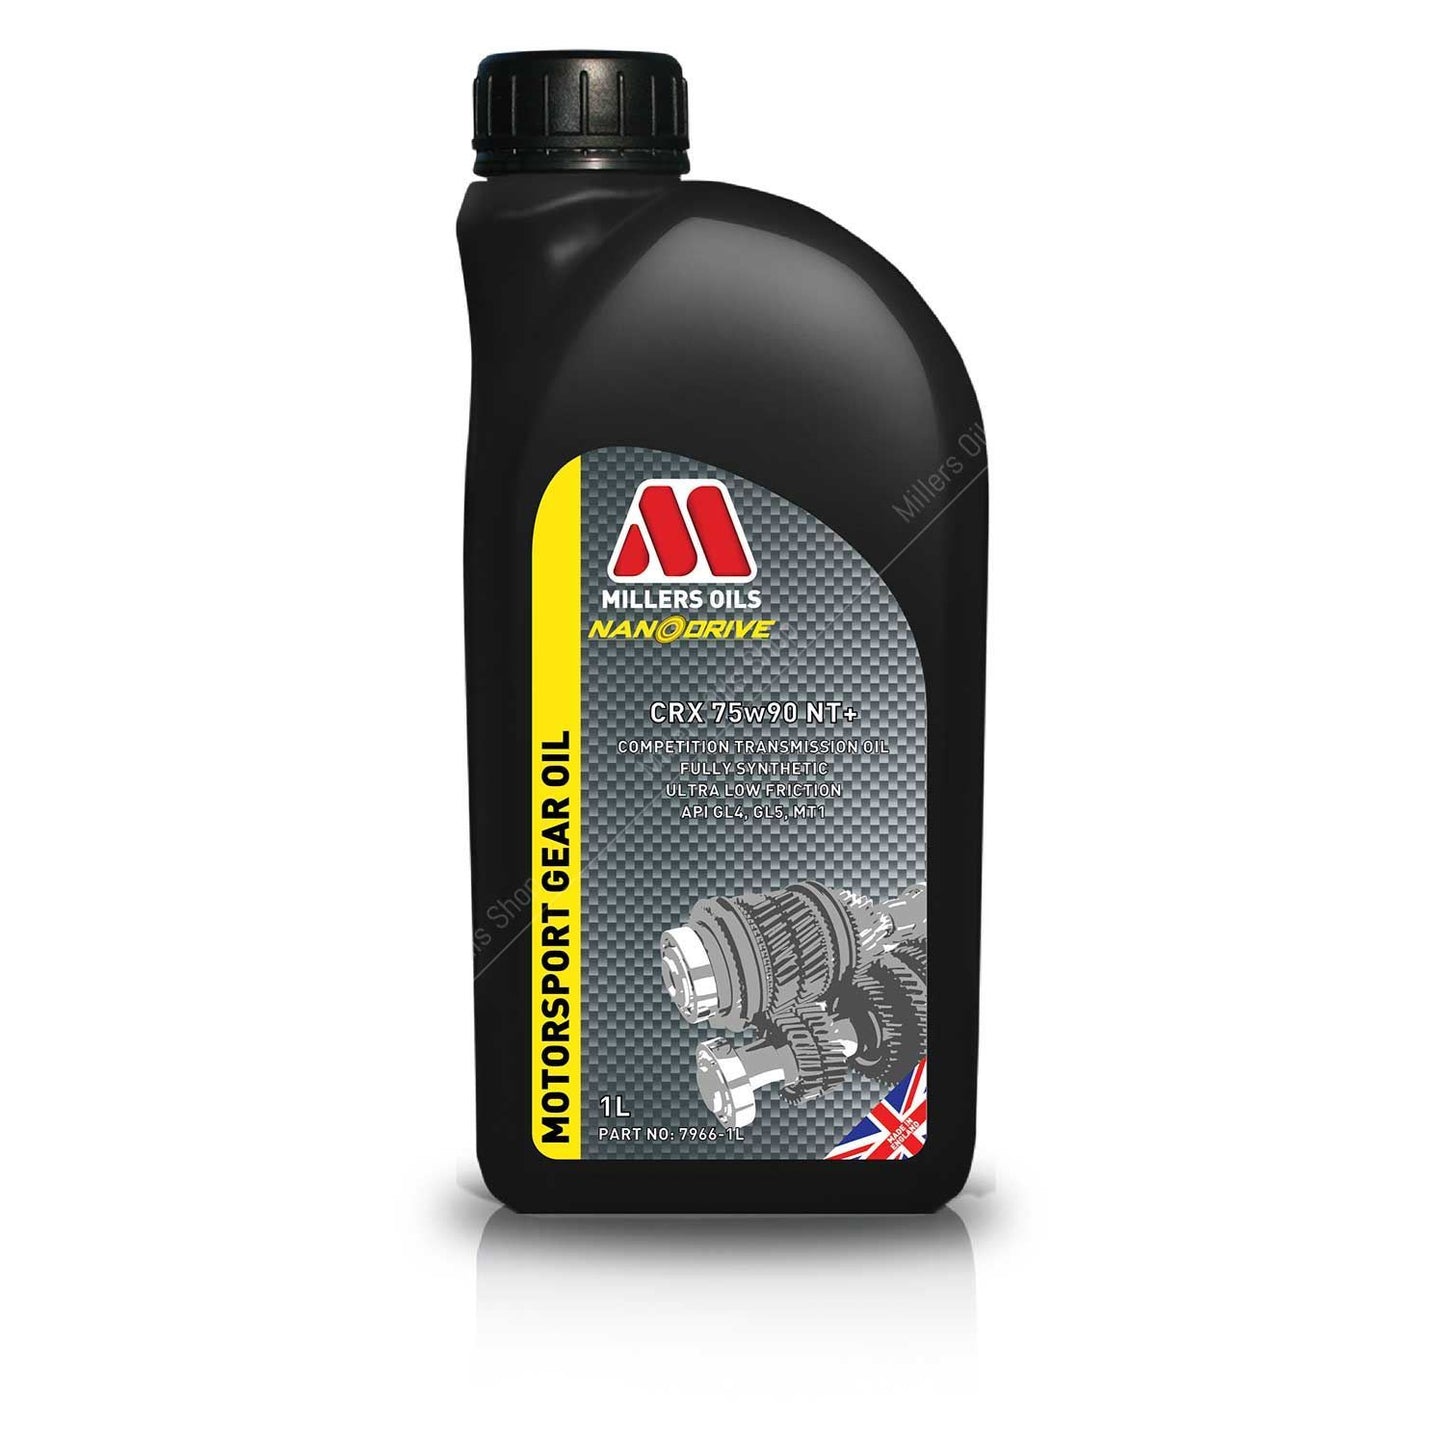 Millers CRX 75w90 NT+ Motorsport Gearbox Oil (1L)